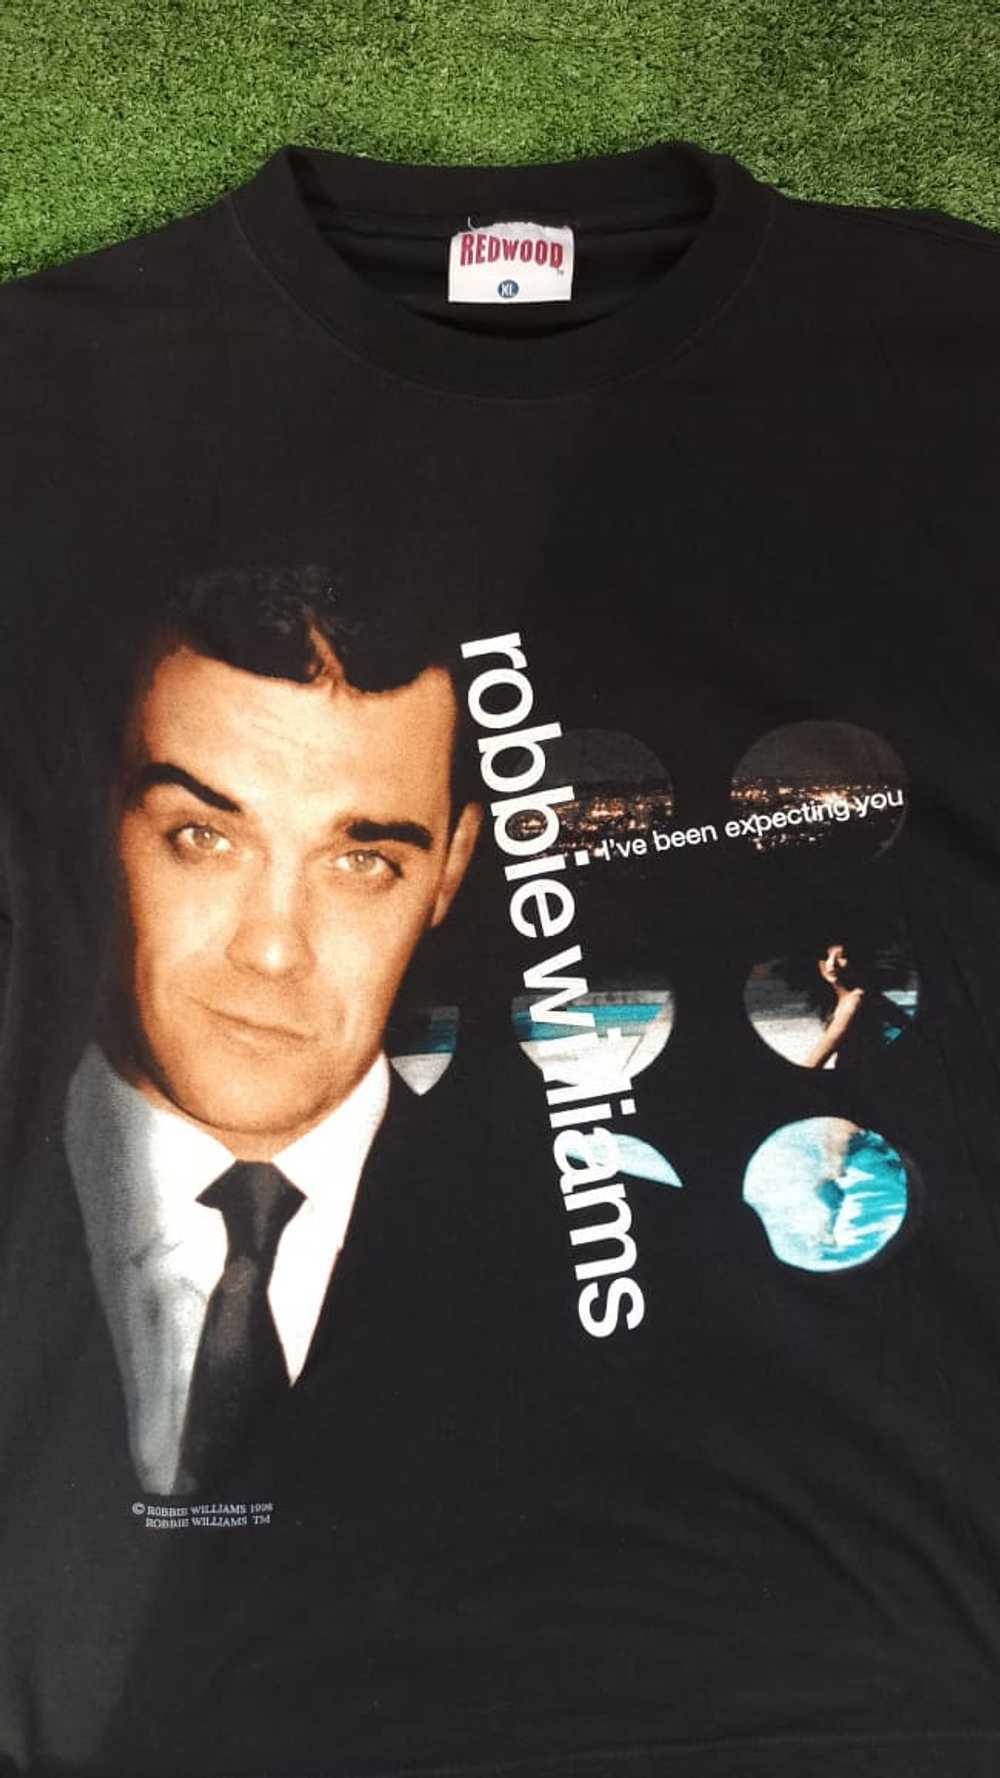 Robbie williams Redwood 1998 vintage tshirt - image 3